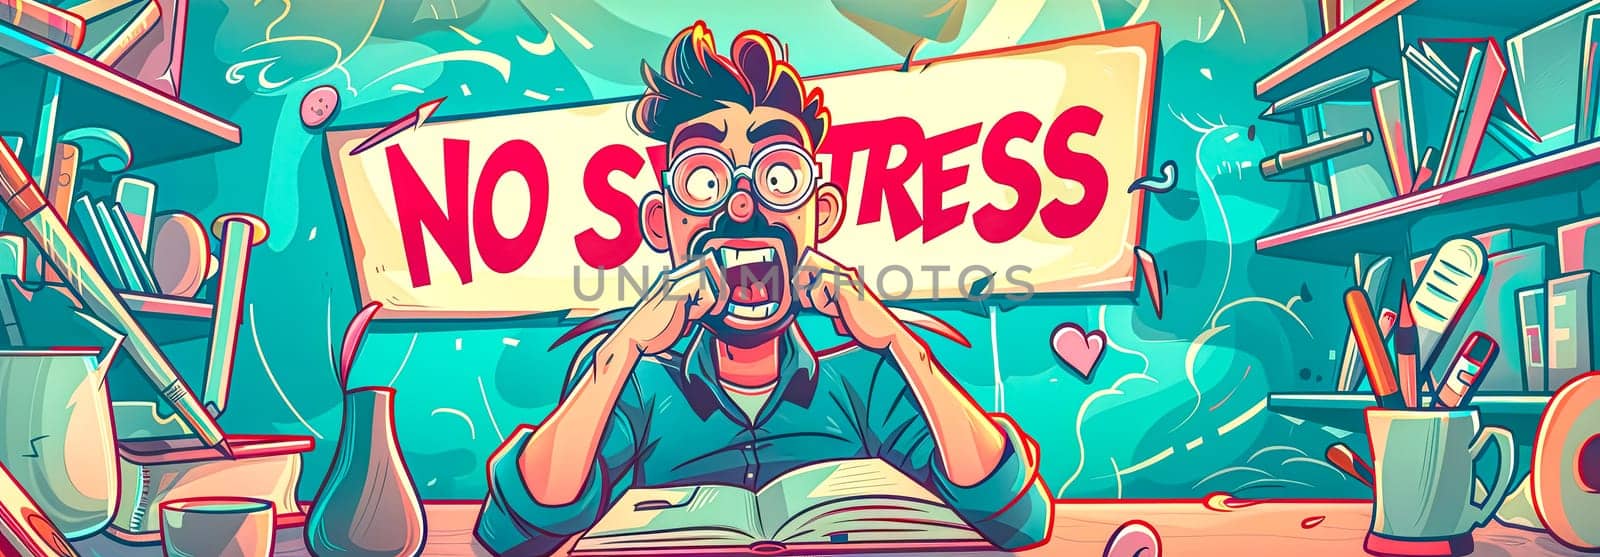 Humorous no stress office illustration by Edophoto